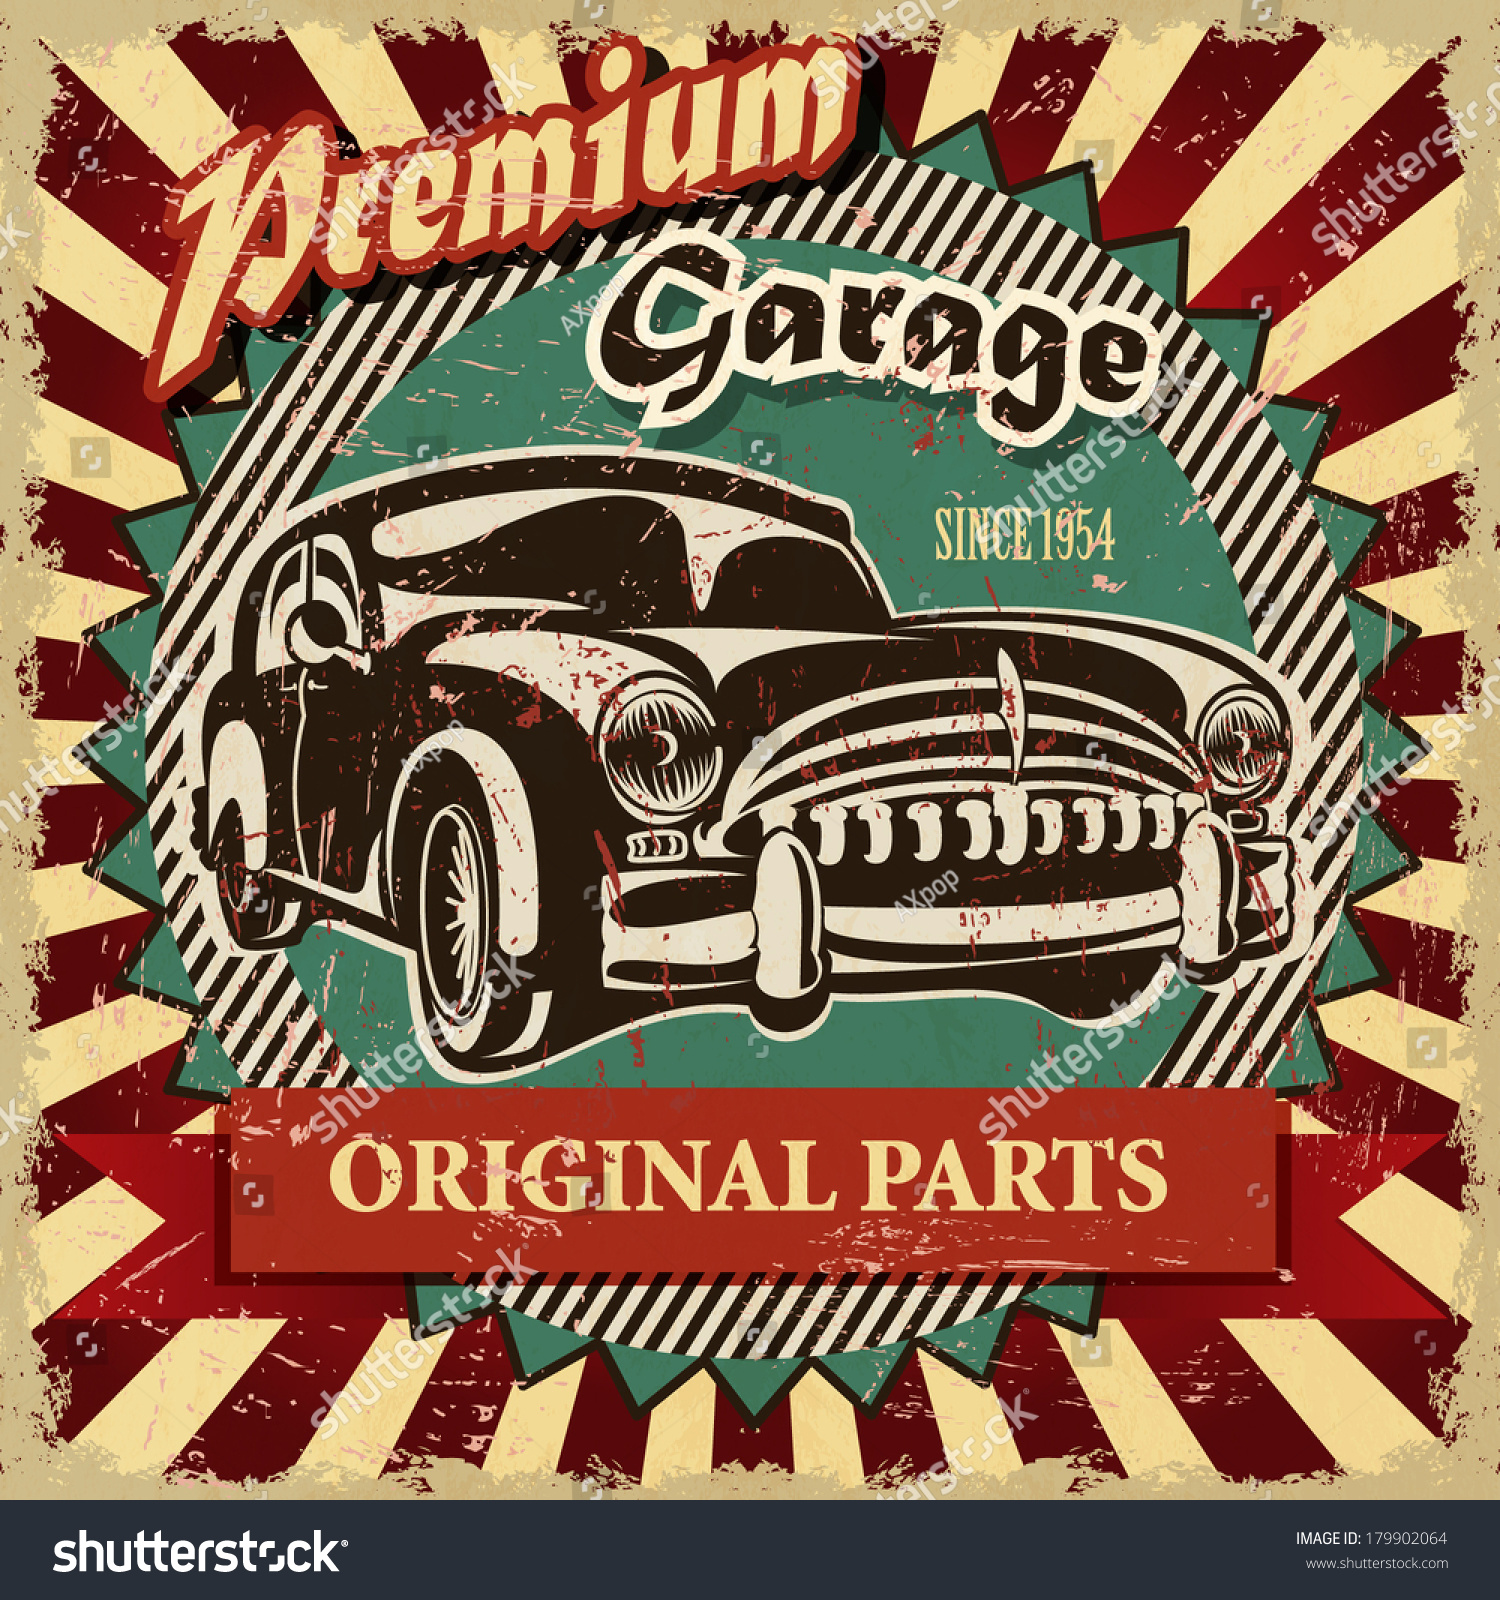 Vintage Garage Retro Poster Stock Vector Illustration 179902064 ...